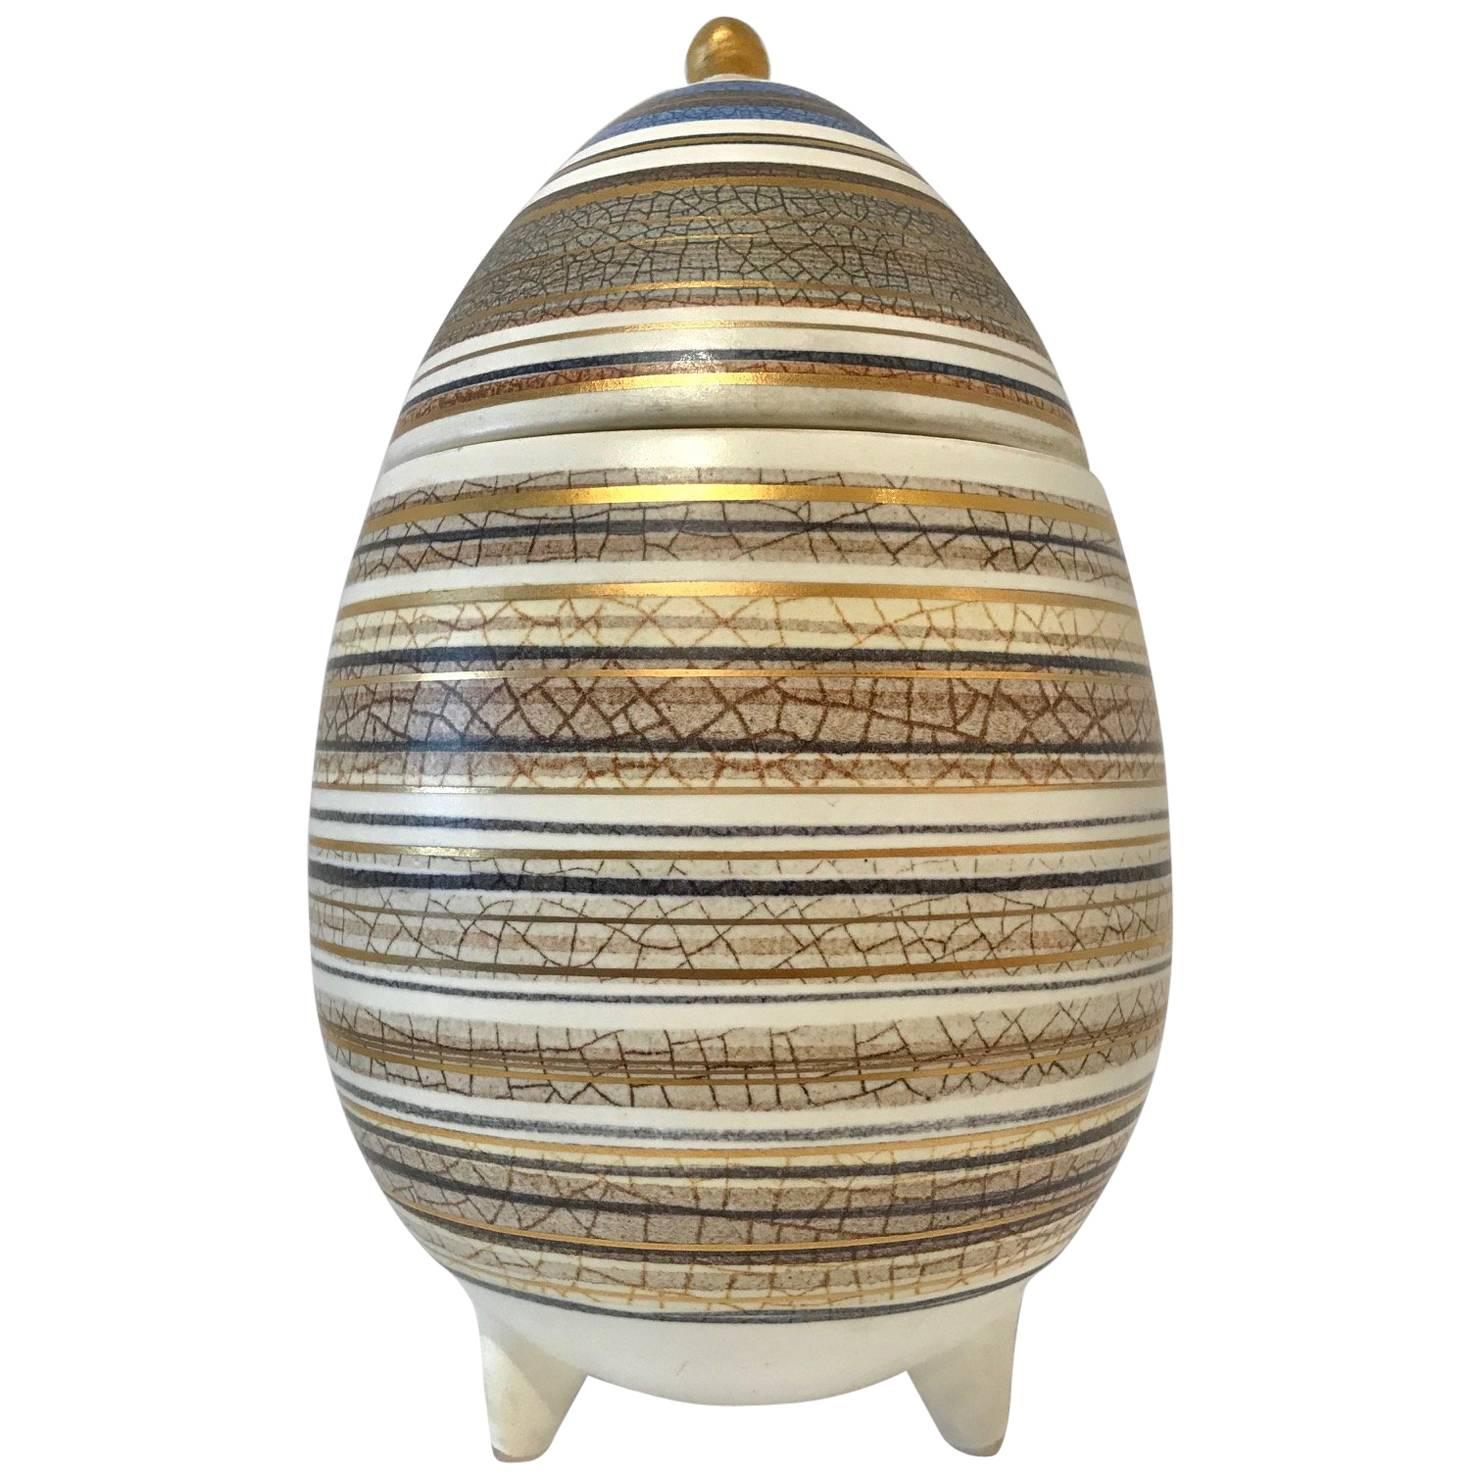 https://a.1stdibscdn.com/sascha-brastoff-ceramic-egg-for-sale/1121189/f_109965511528380973620/10996551_master.jpg